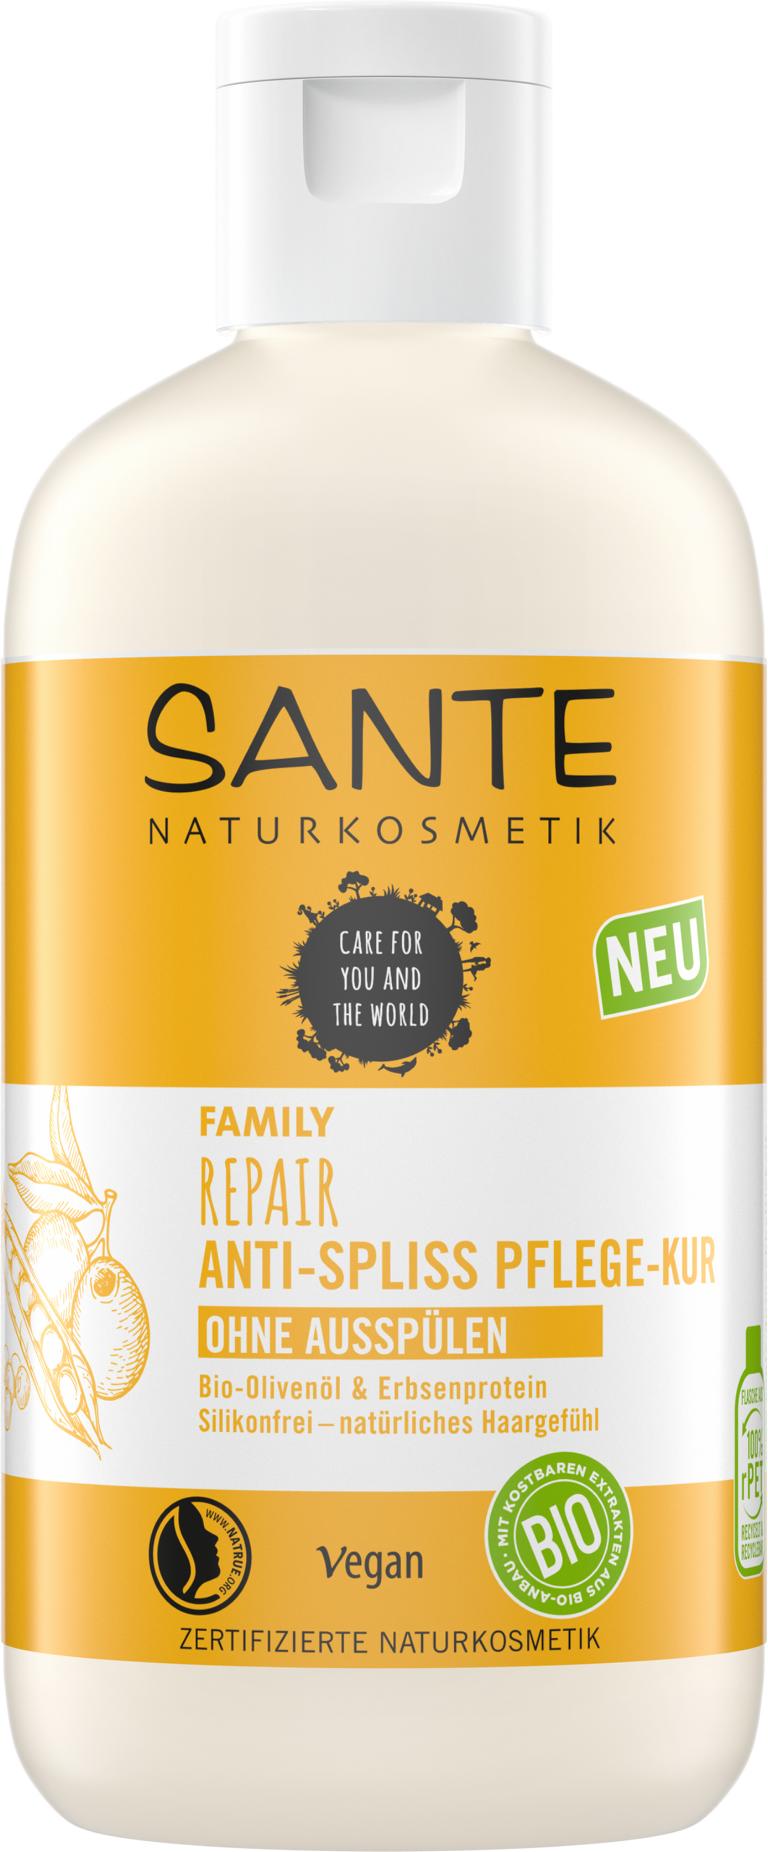 Sante FAMILY Repair Anti-Spliss Kur Bio-Olivenöl & Erbsenprotein 200ml